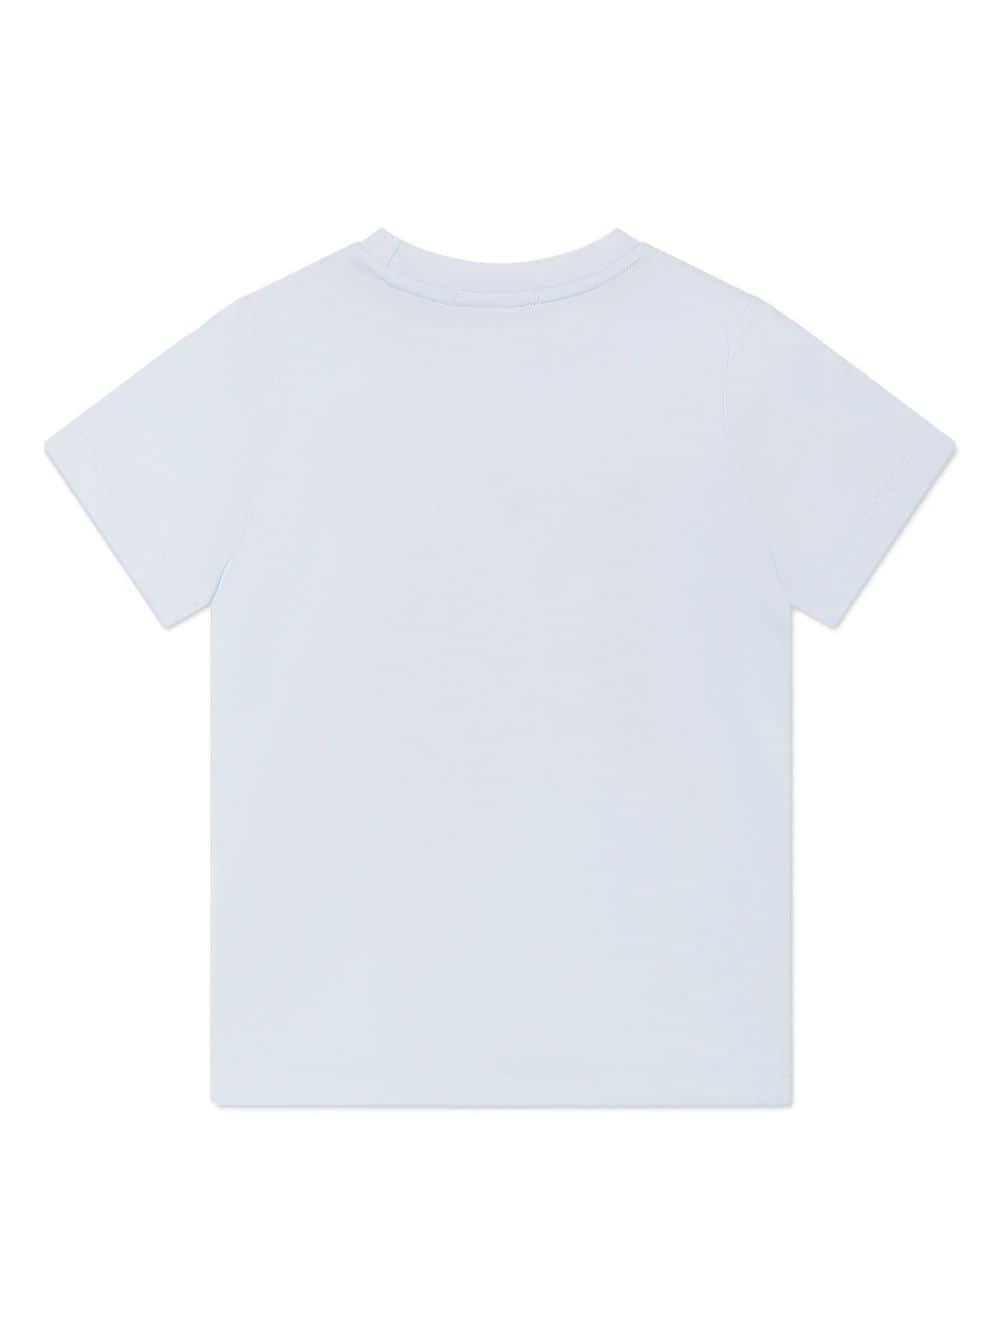 Shop Aigner Logo-print Cotton T-shirt In Blue